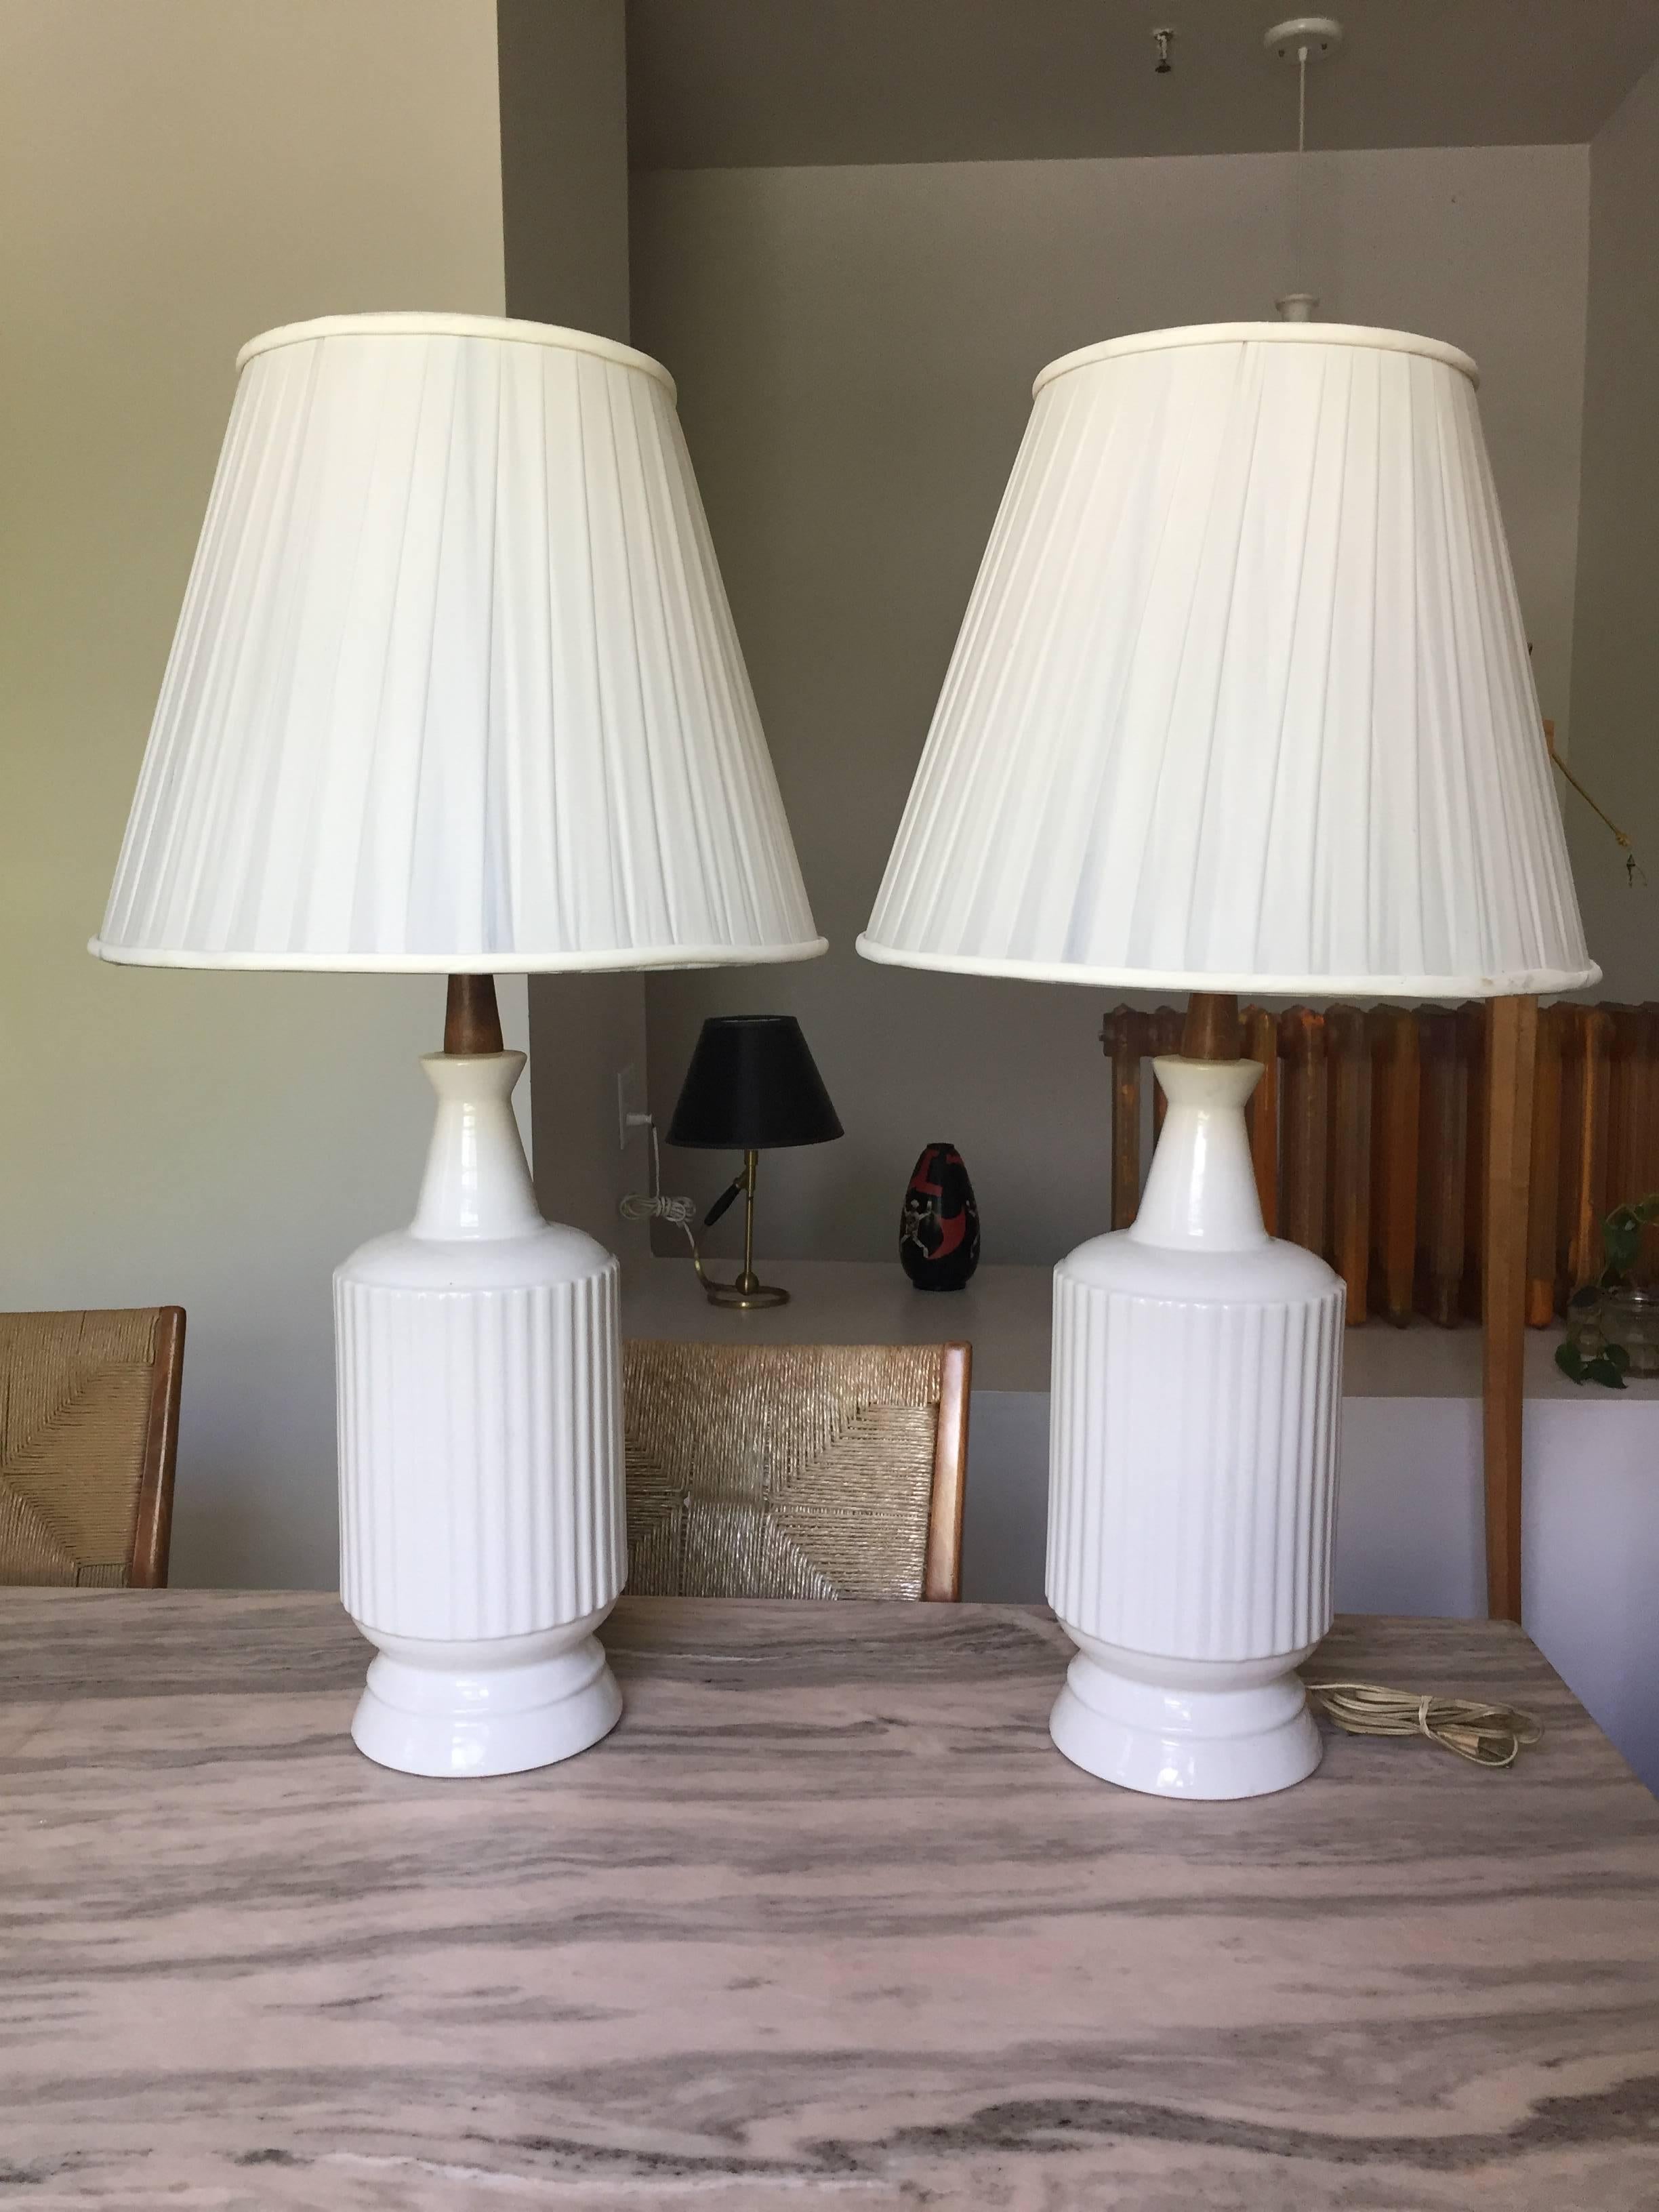 Mid-20th Century Pair of Ceramic Table Lamps